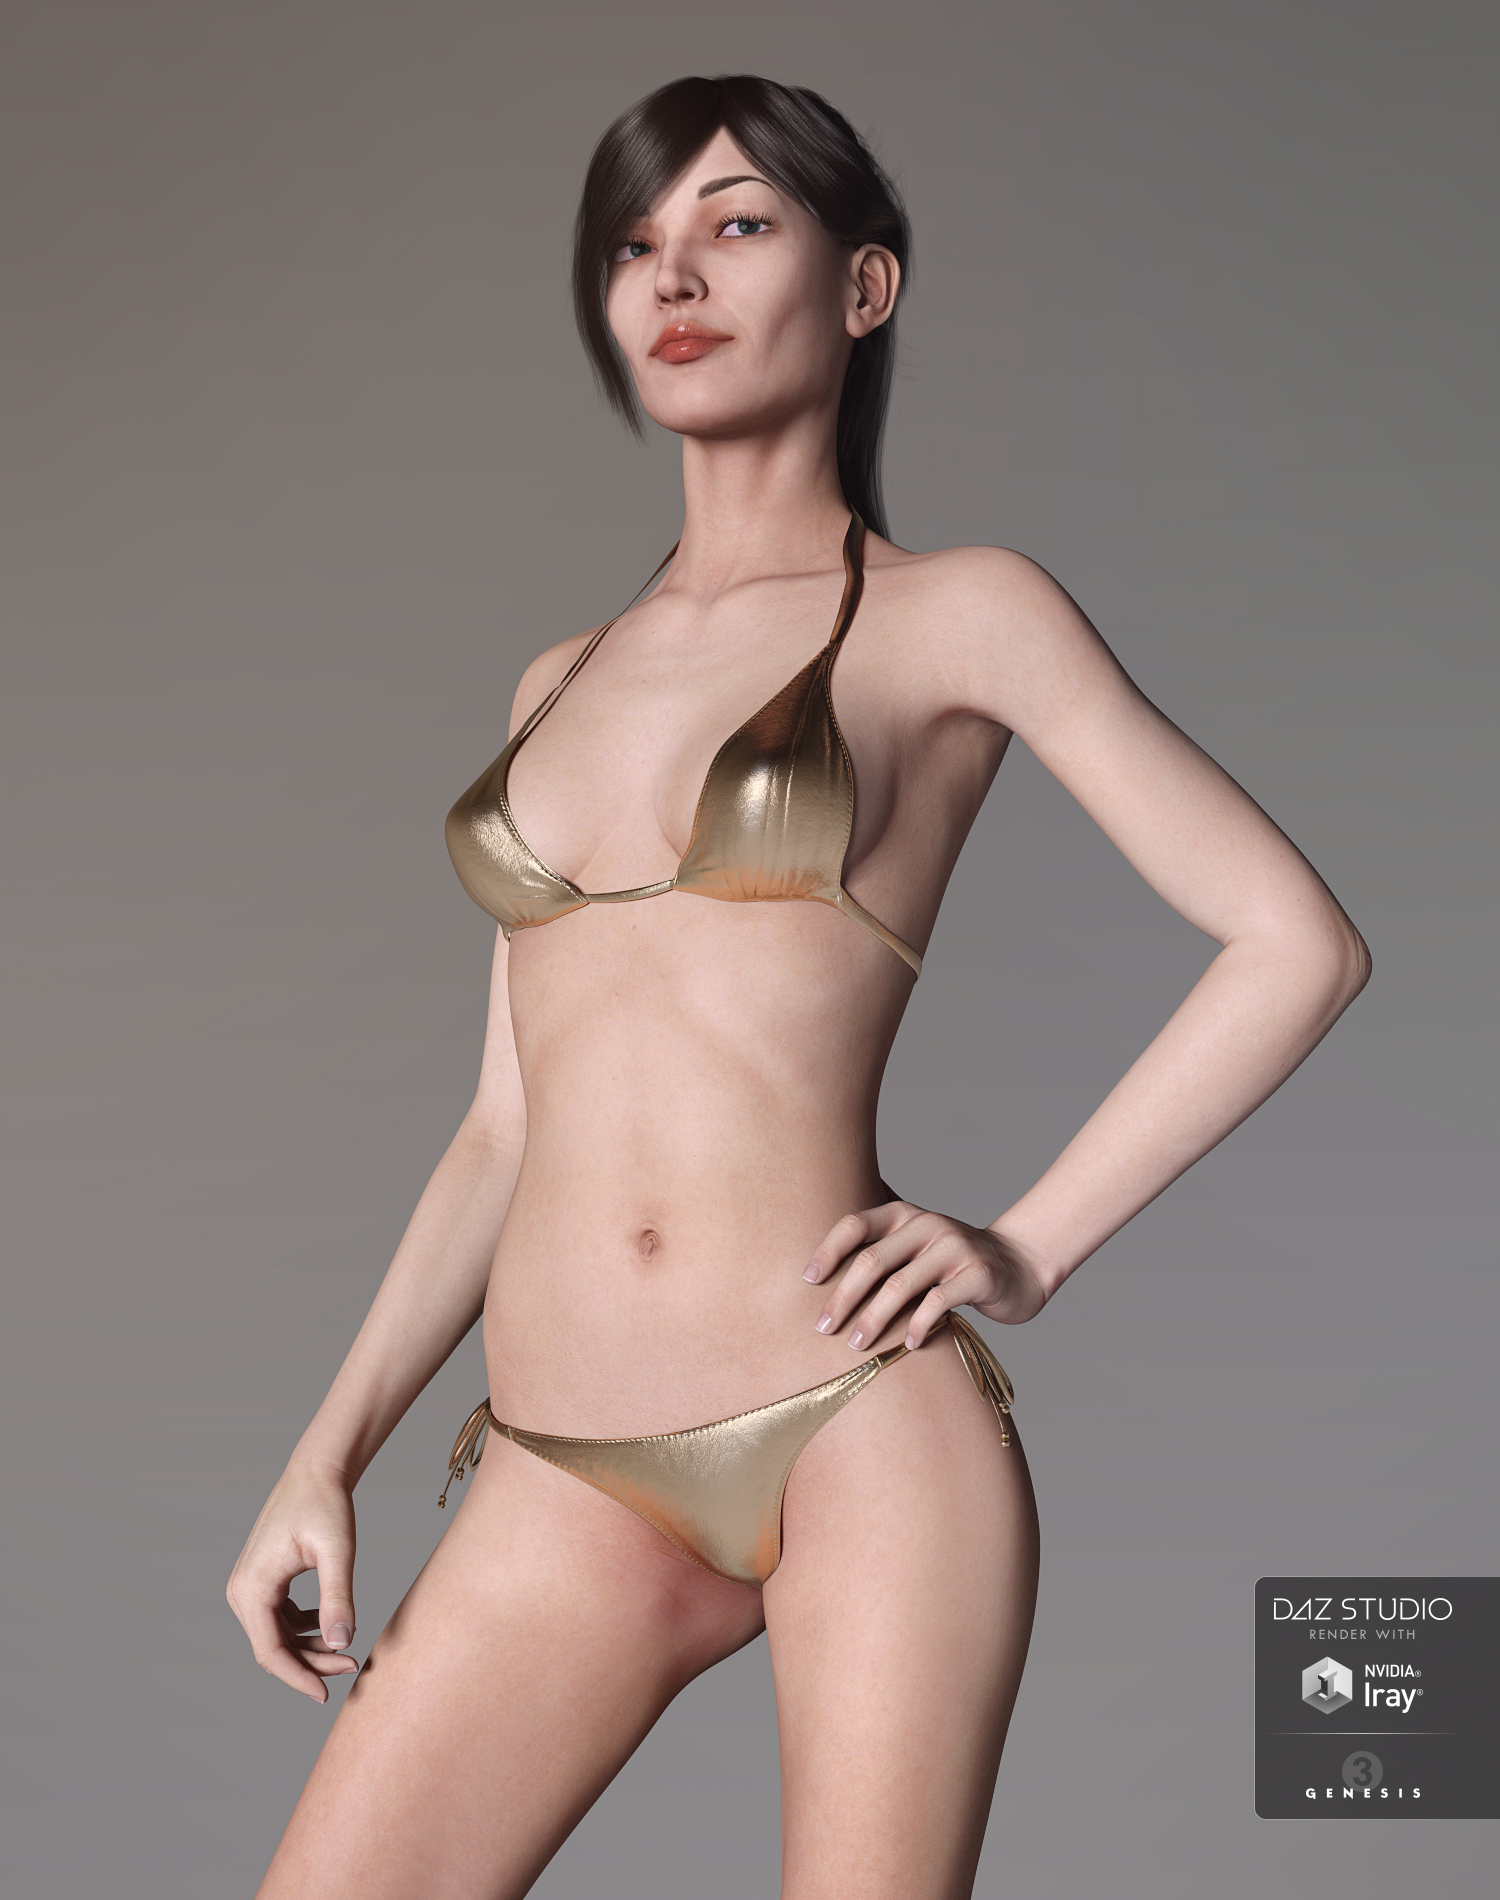 Genevieve 7 by: , 3D Models by Daz 3D